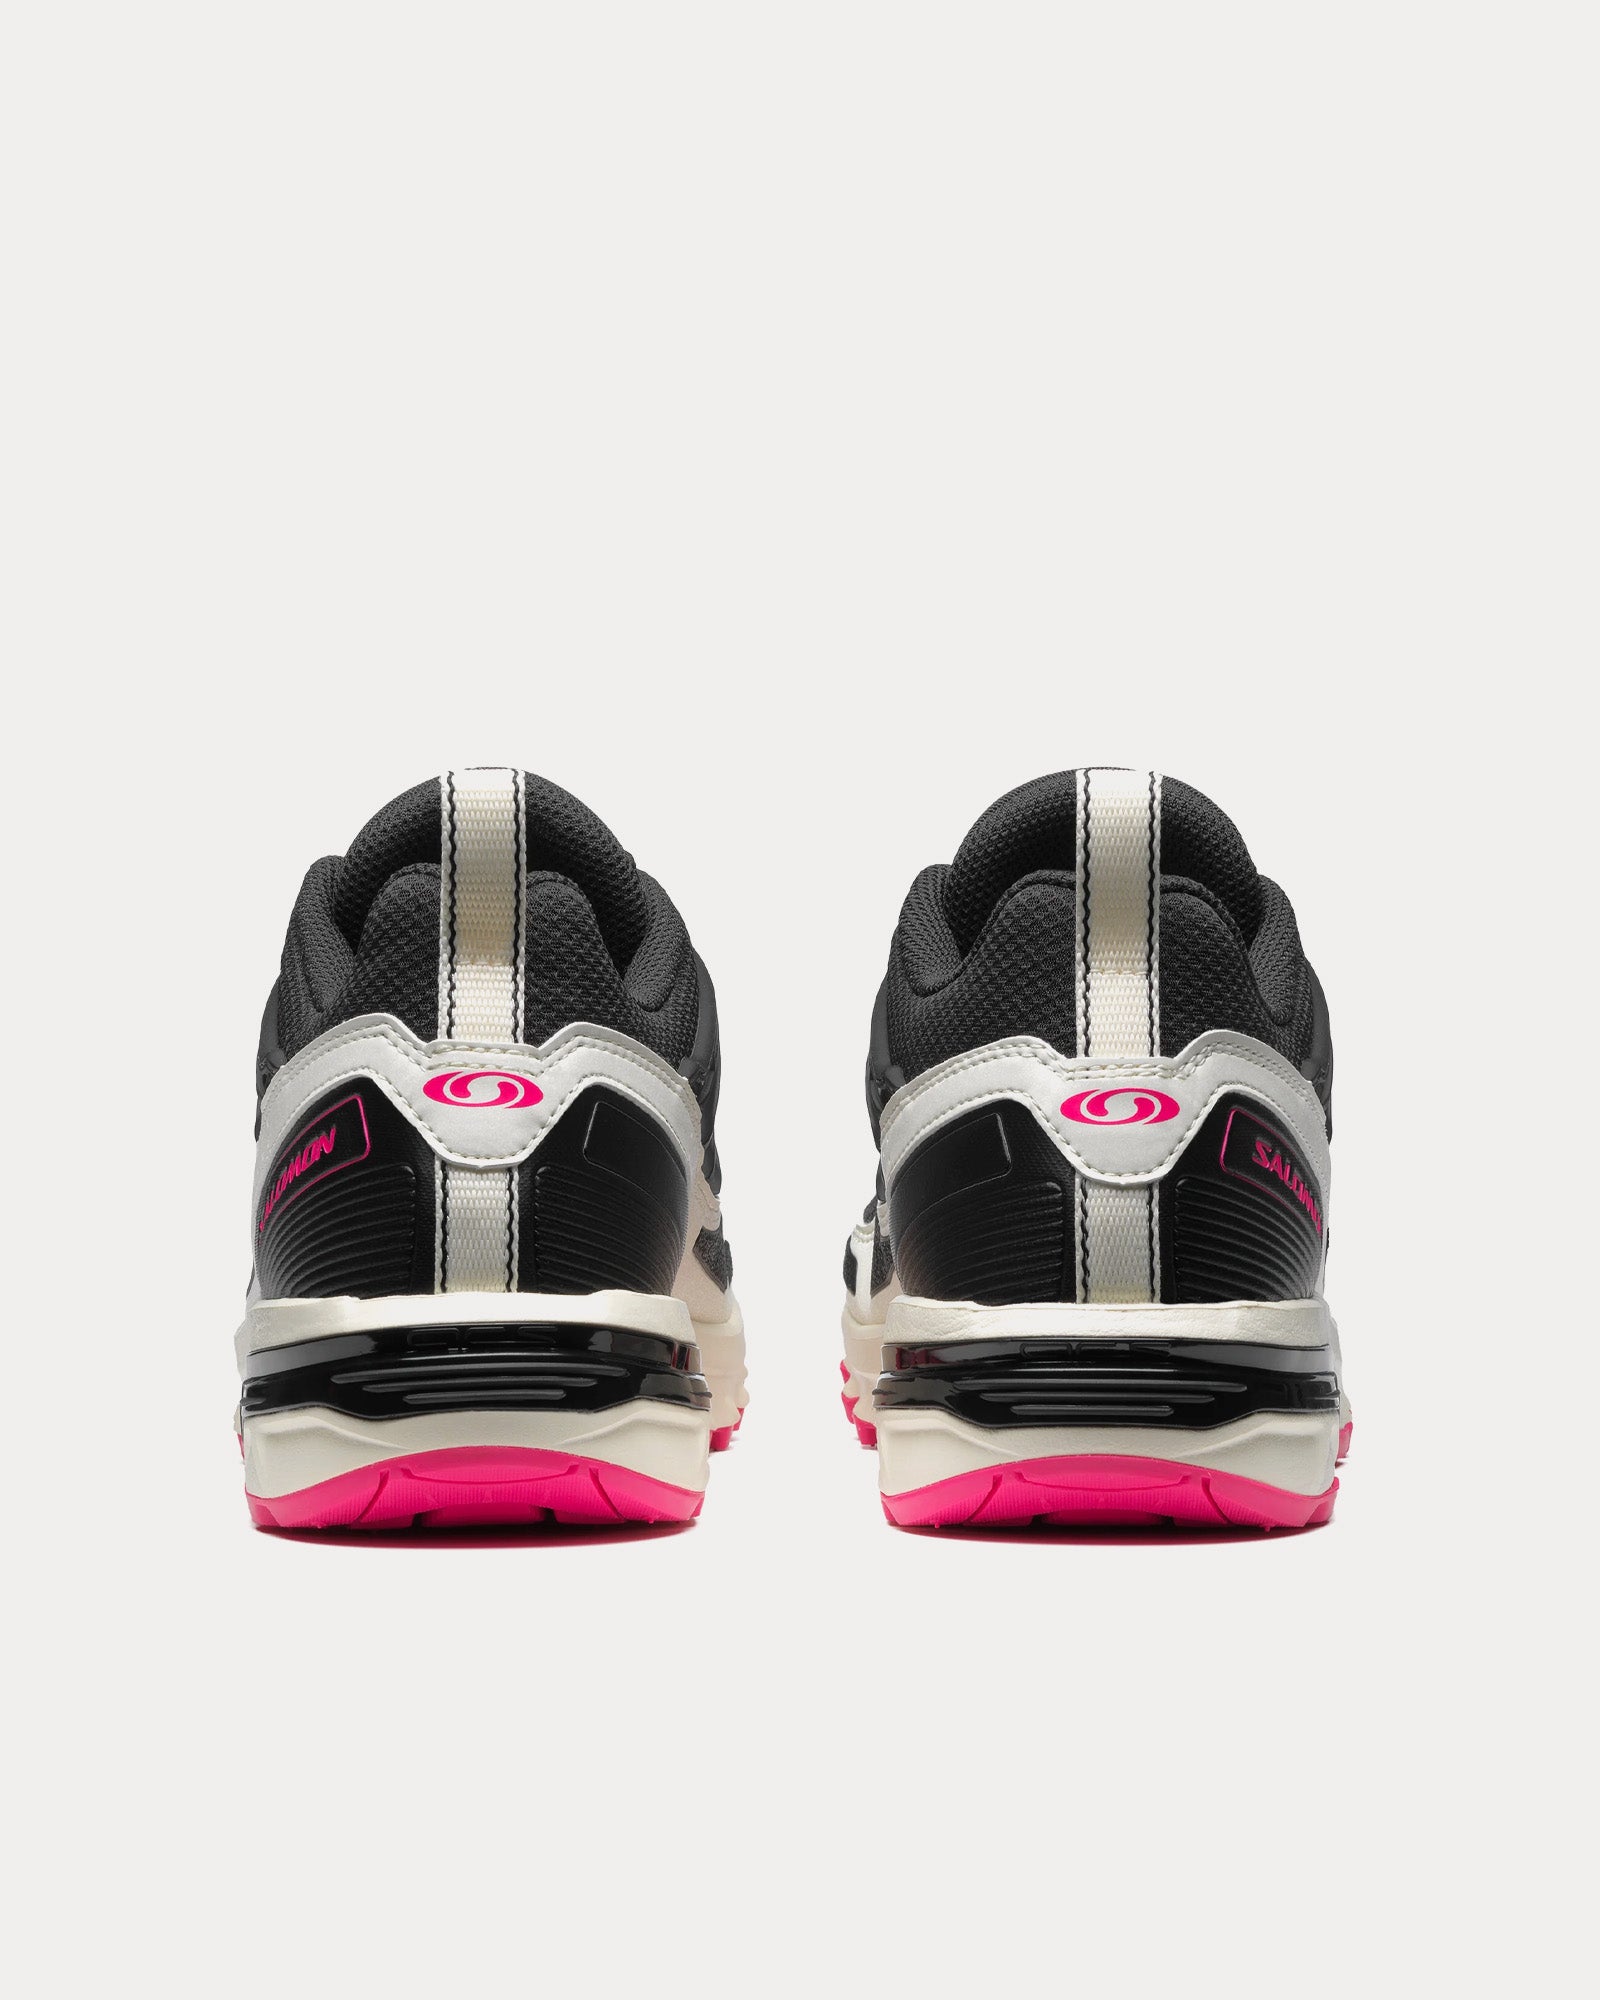 Salomon - ACS + Heritage Pack Black / Vanilla Ice / Pink Glo Low Top Sneakers